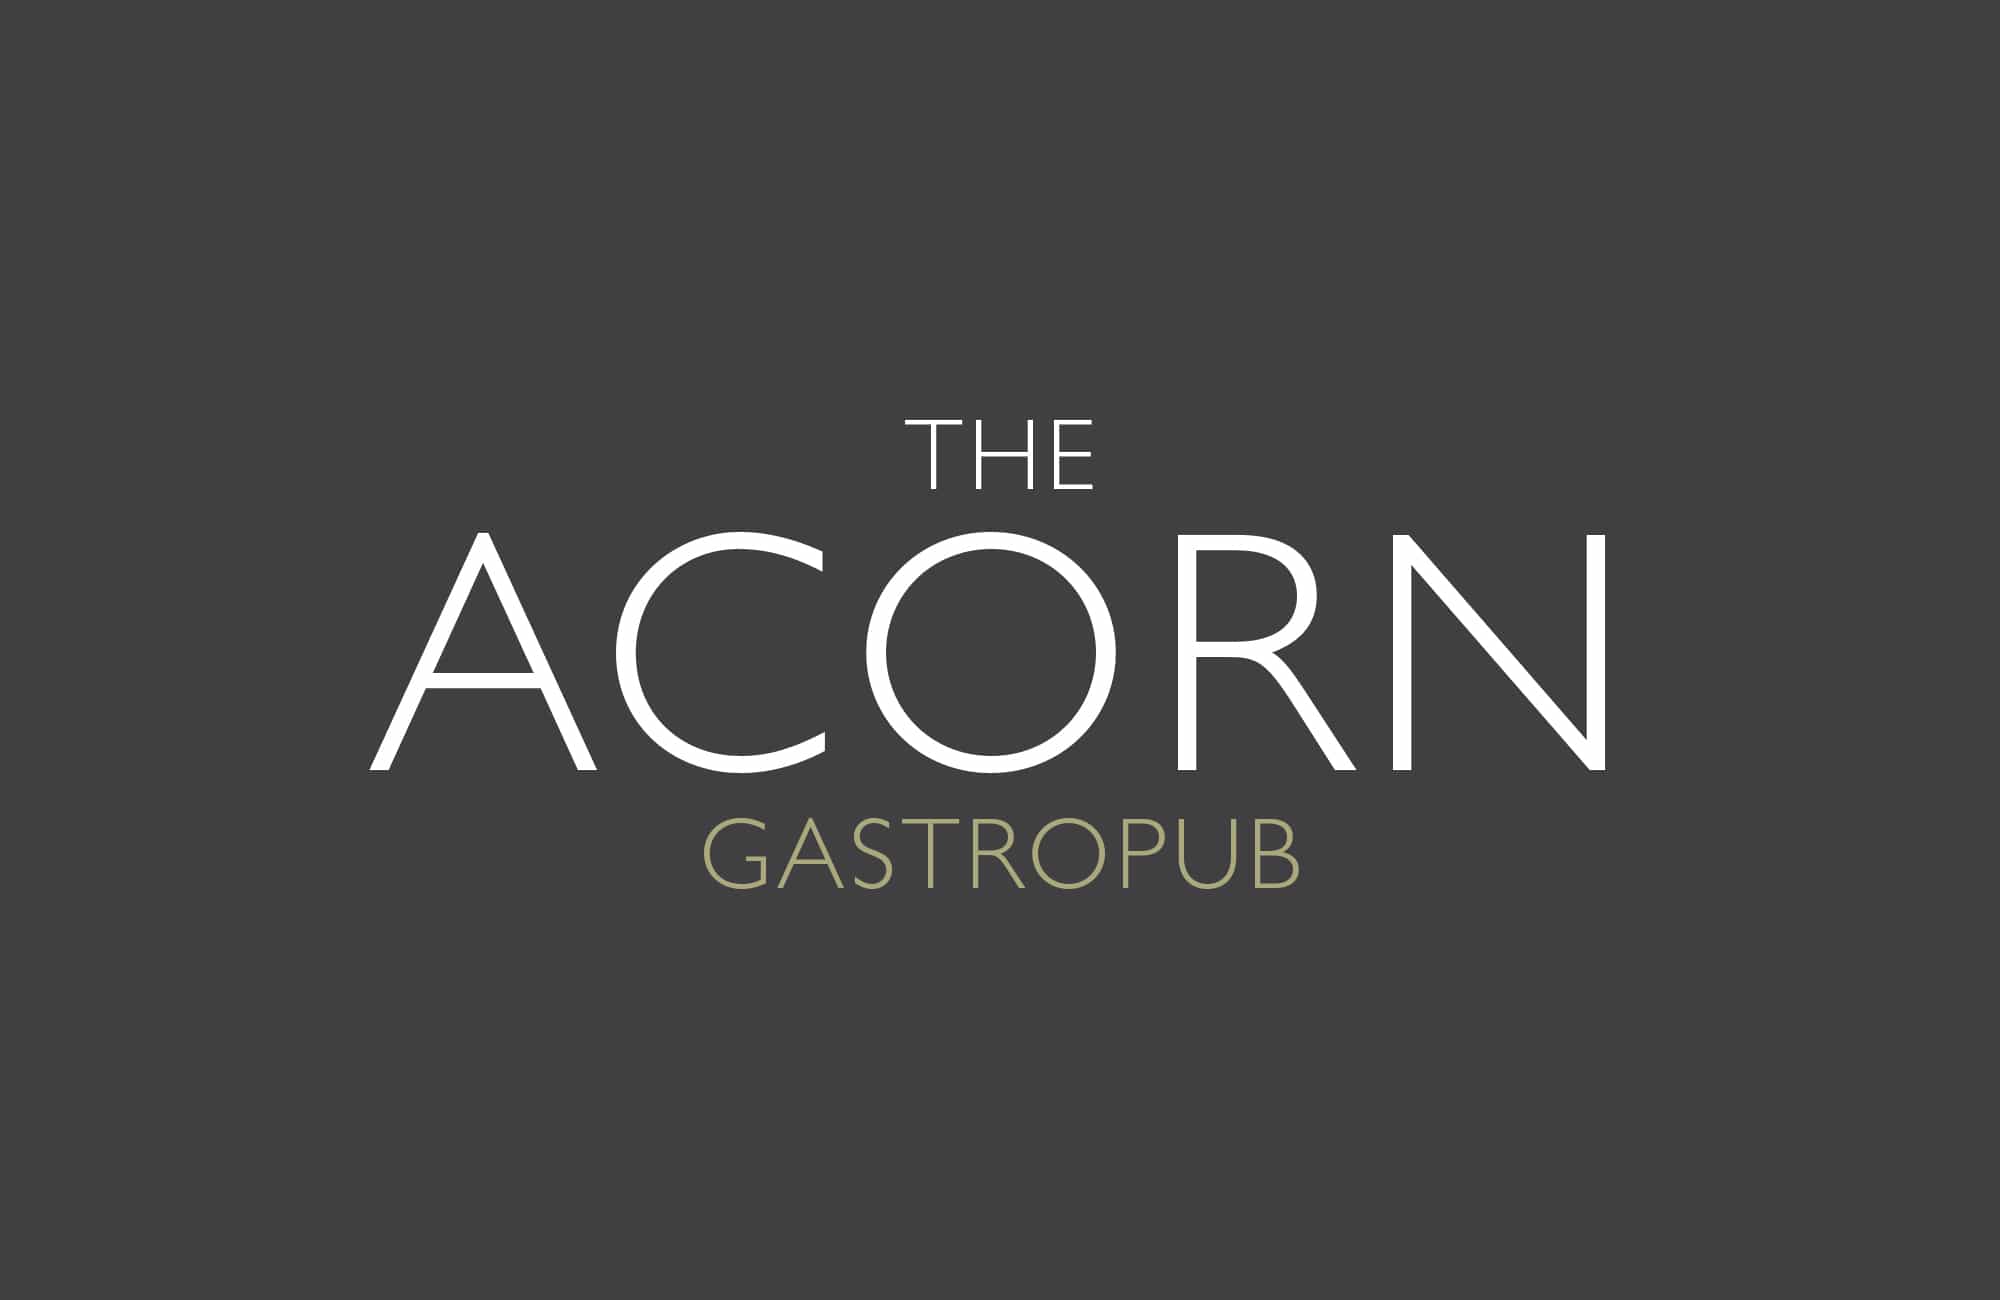 The Acorn Gastropub